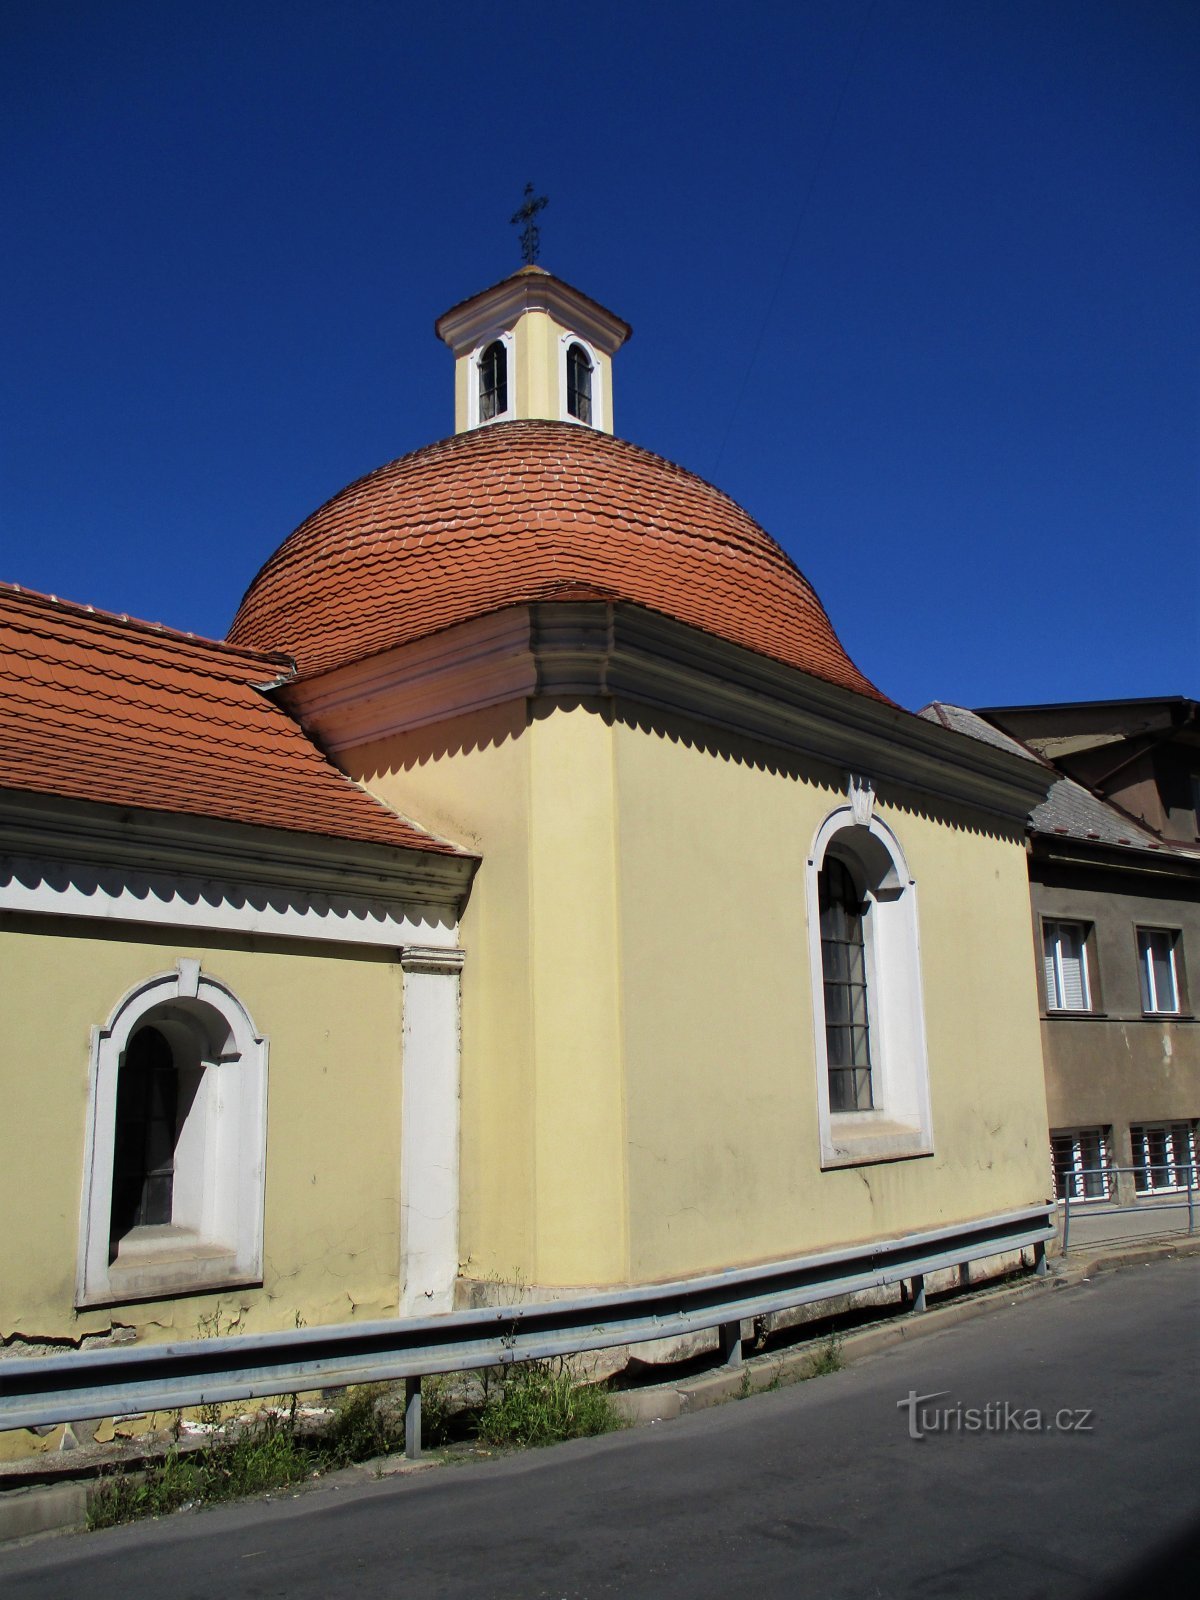 Kapelle St. Josefa (Roudnice nad Labem, 31.7.2020. Juli XNUMX)